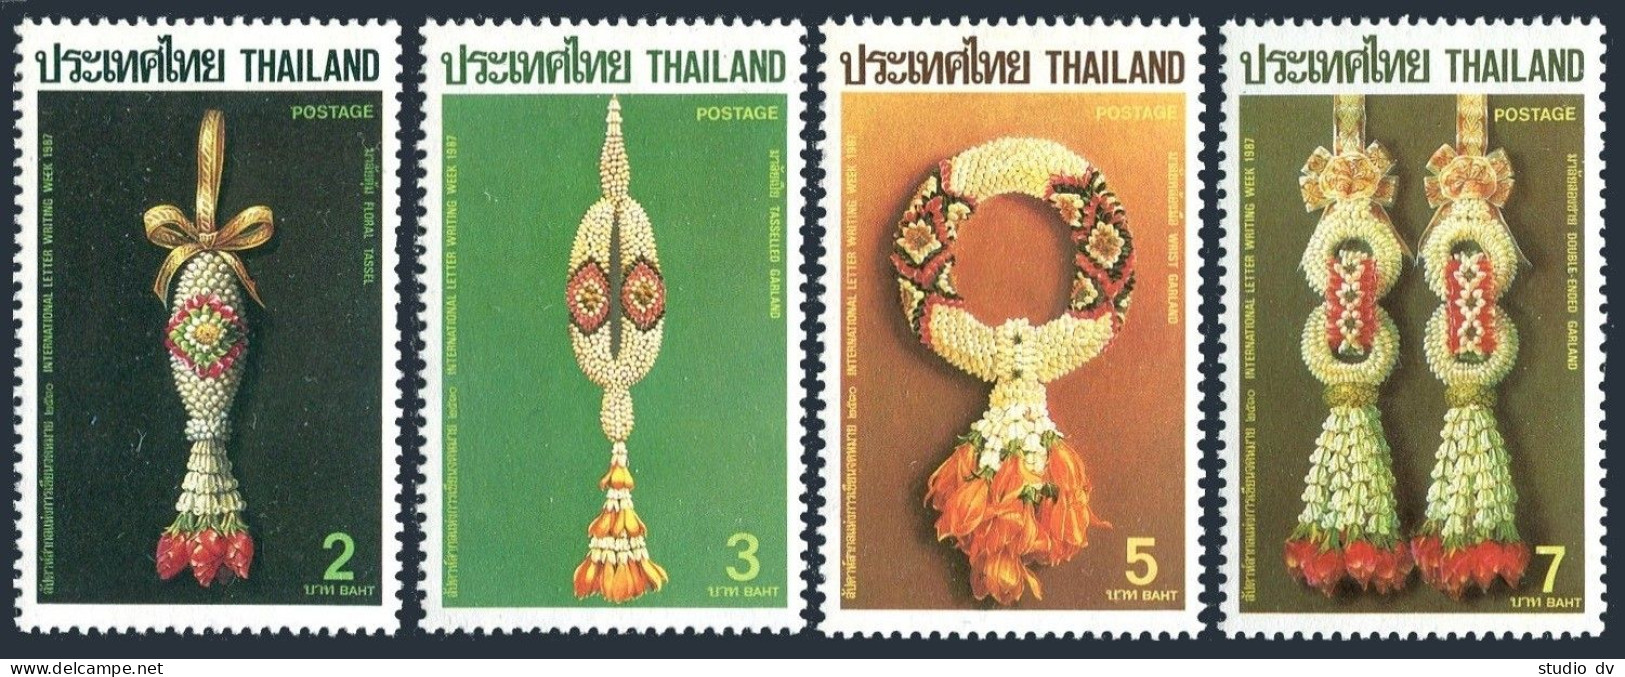 Thailand 1192-1195,MNH.Michel 1216-1219. Letter Week,1987. Floral Garlands. - Thailand